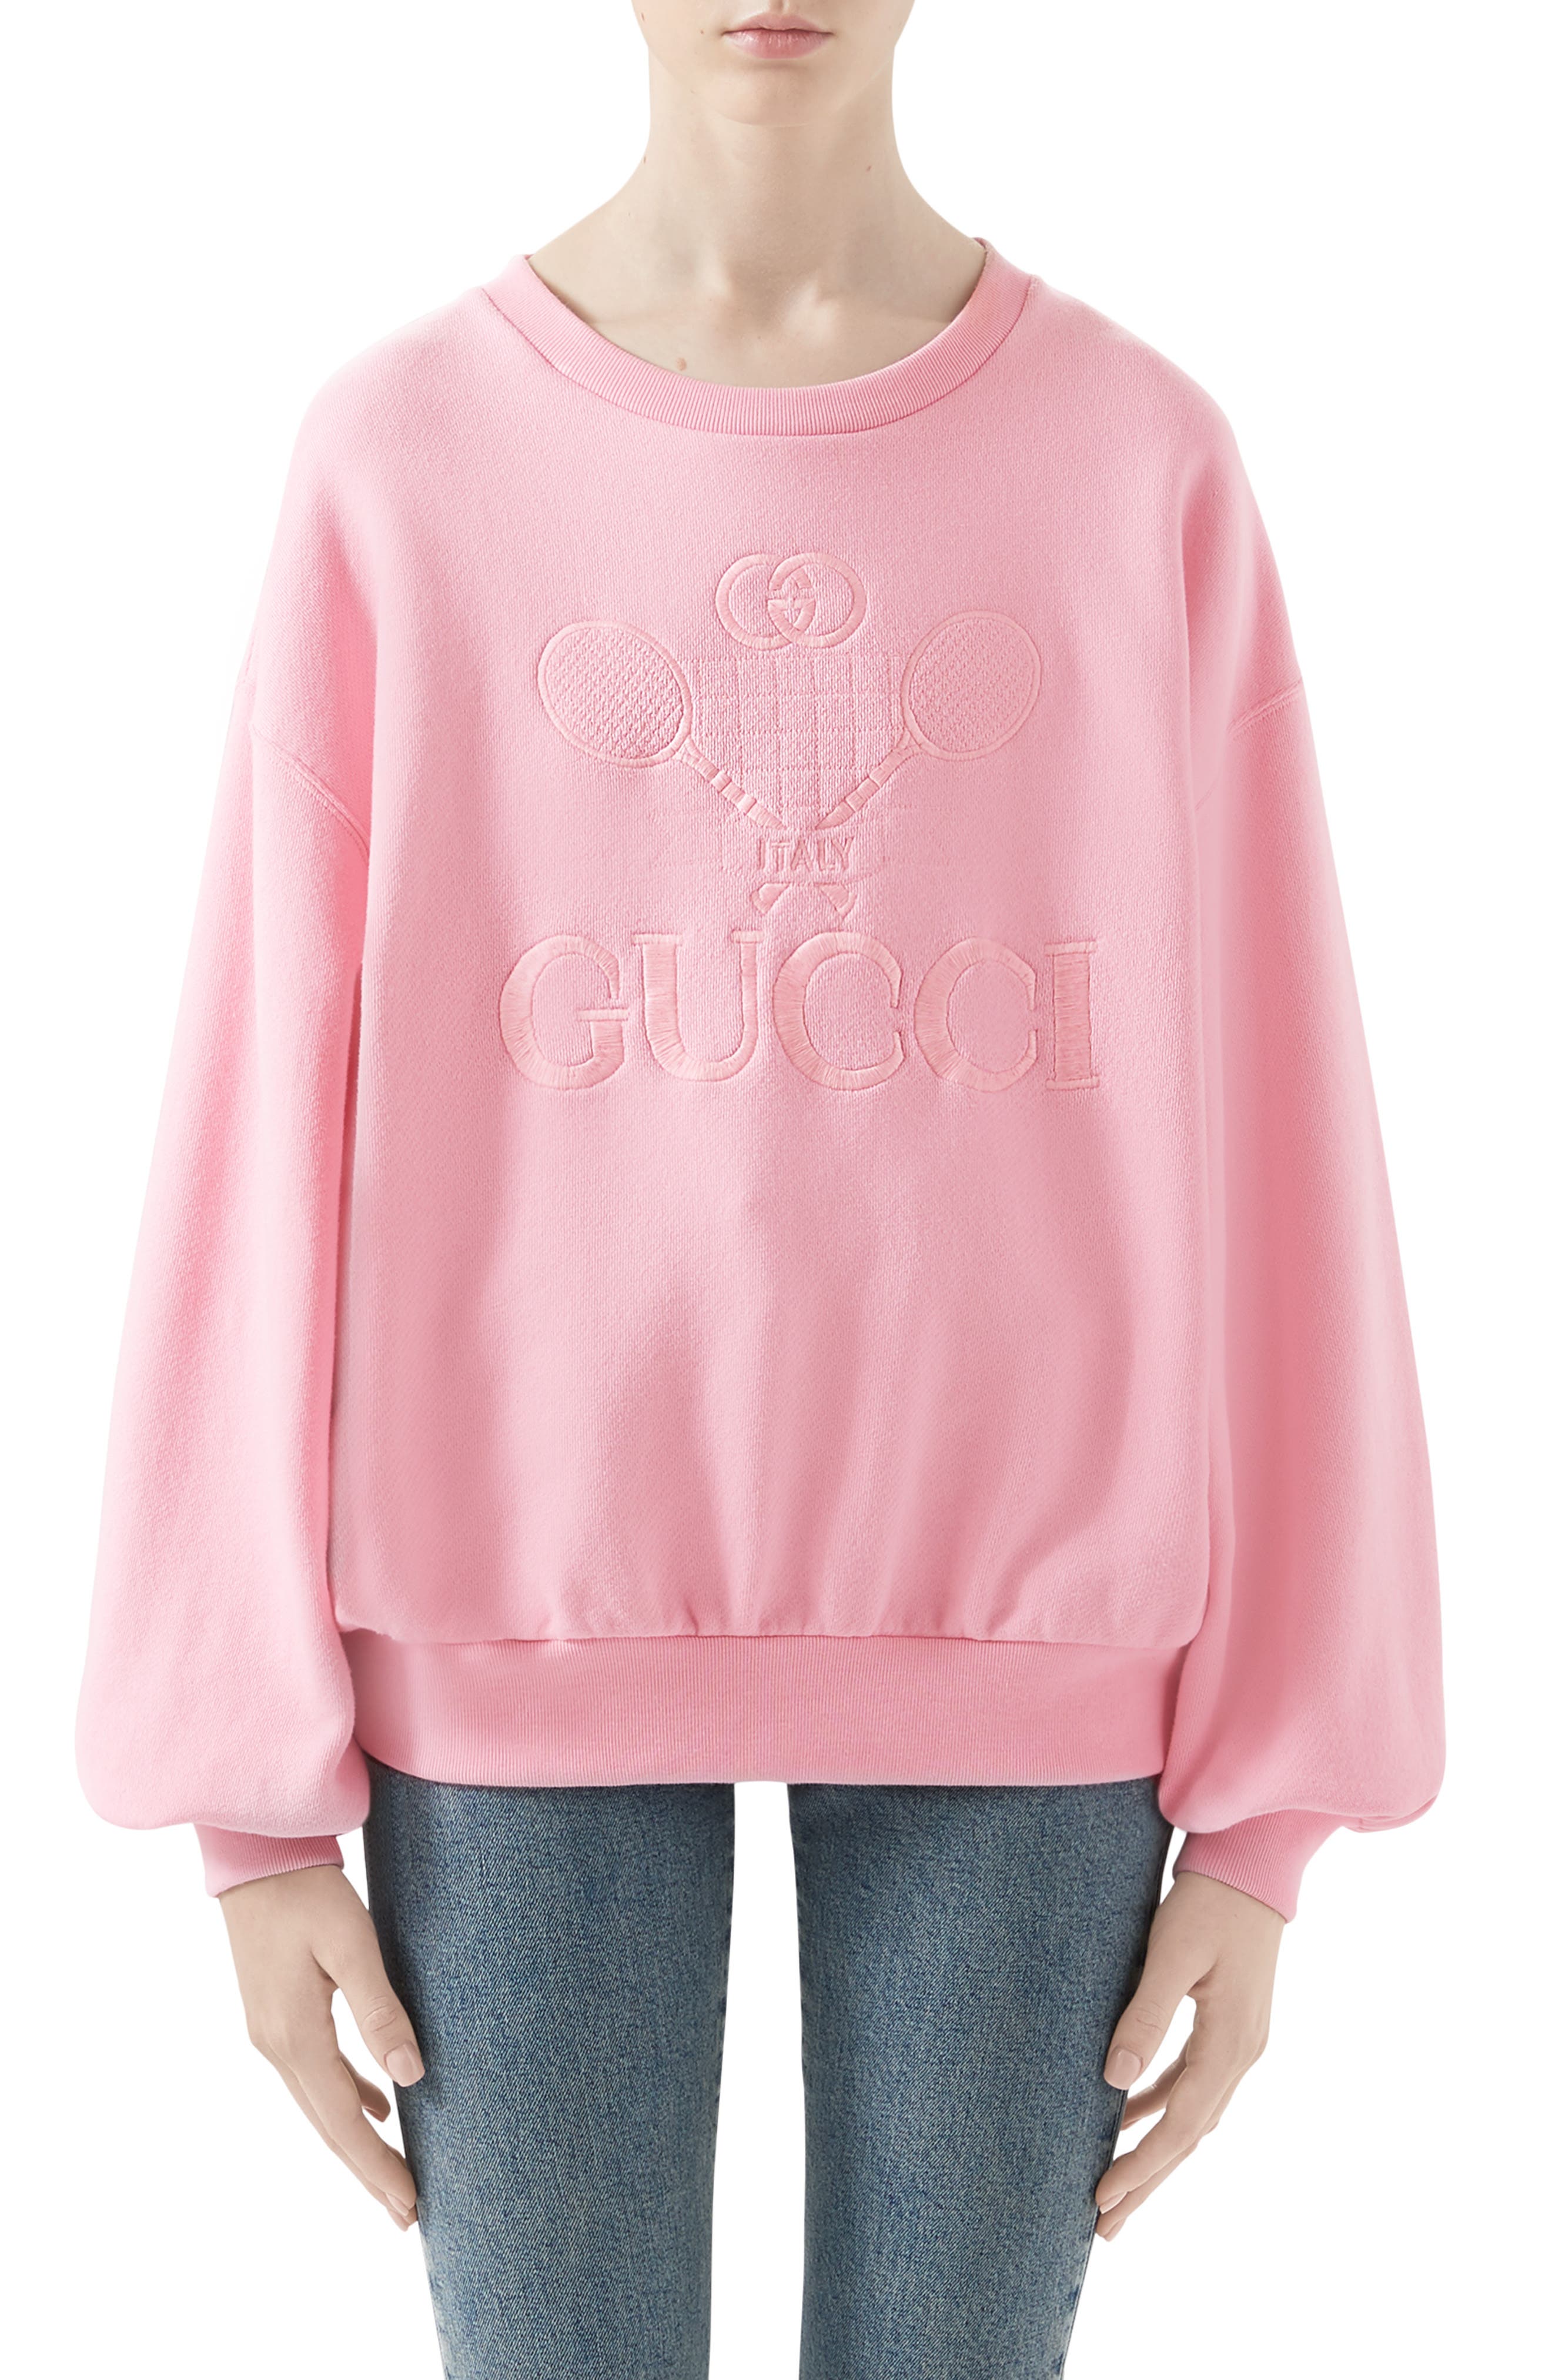 pink gucci sweatshirt